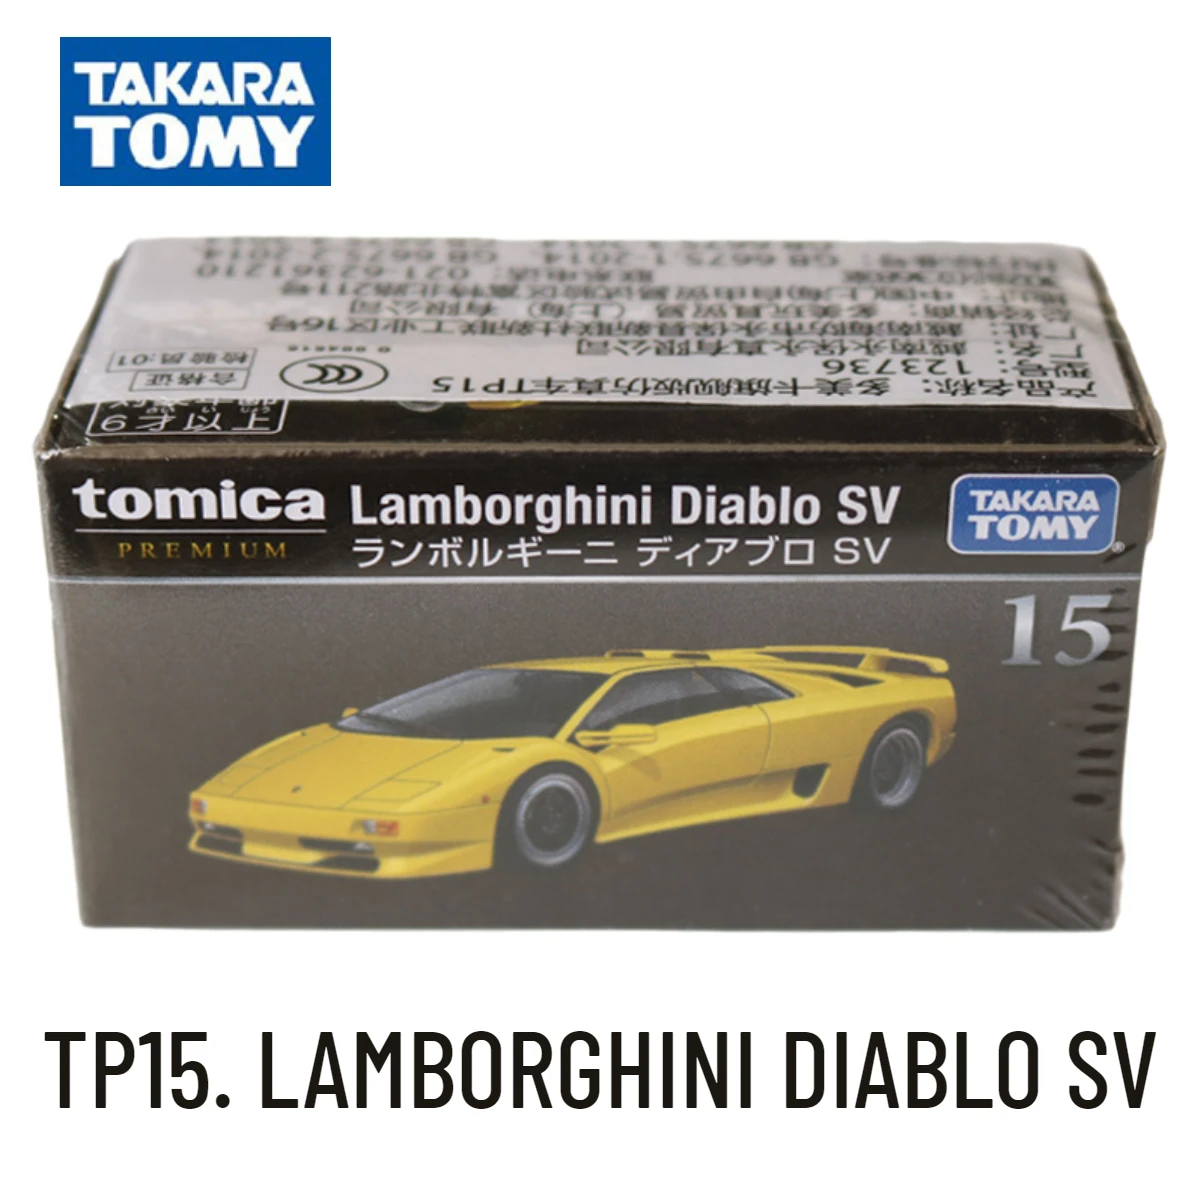 

Takara Tomy Tomica Premium TP, LAMBORGHINI DIABLO SV Scale Car Model Collection, Kids Room Decor Xmas Gift Toys for Boys